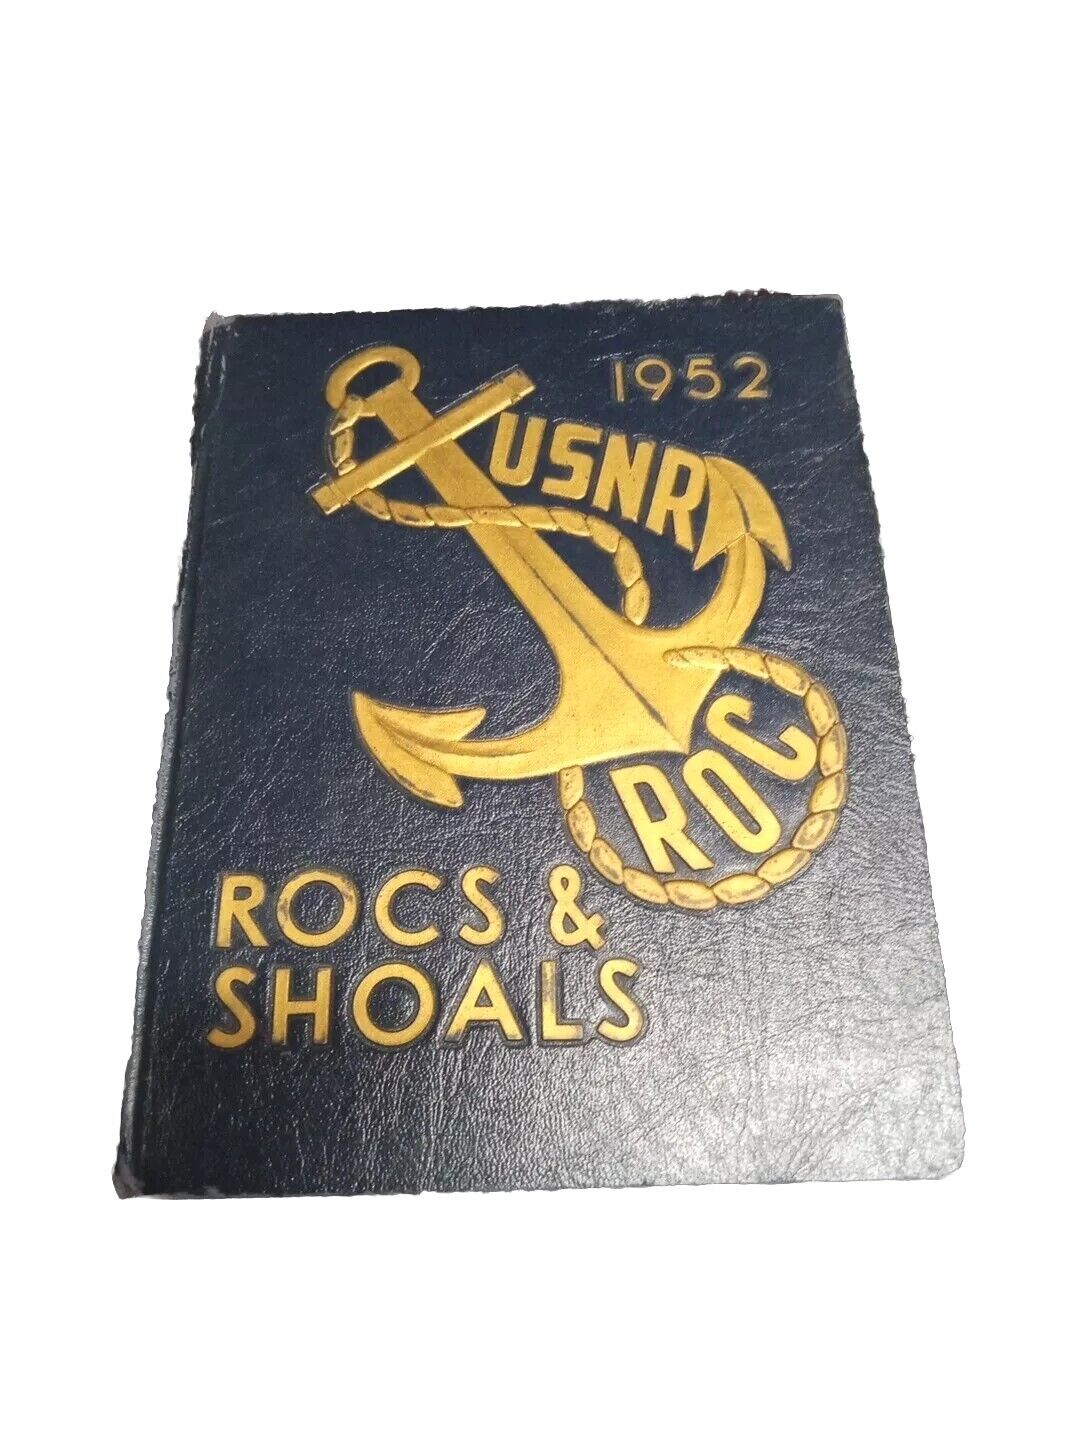 Vintage 1952 USNR ROC ROCS&SHOALS